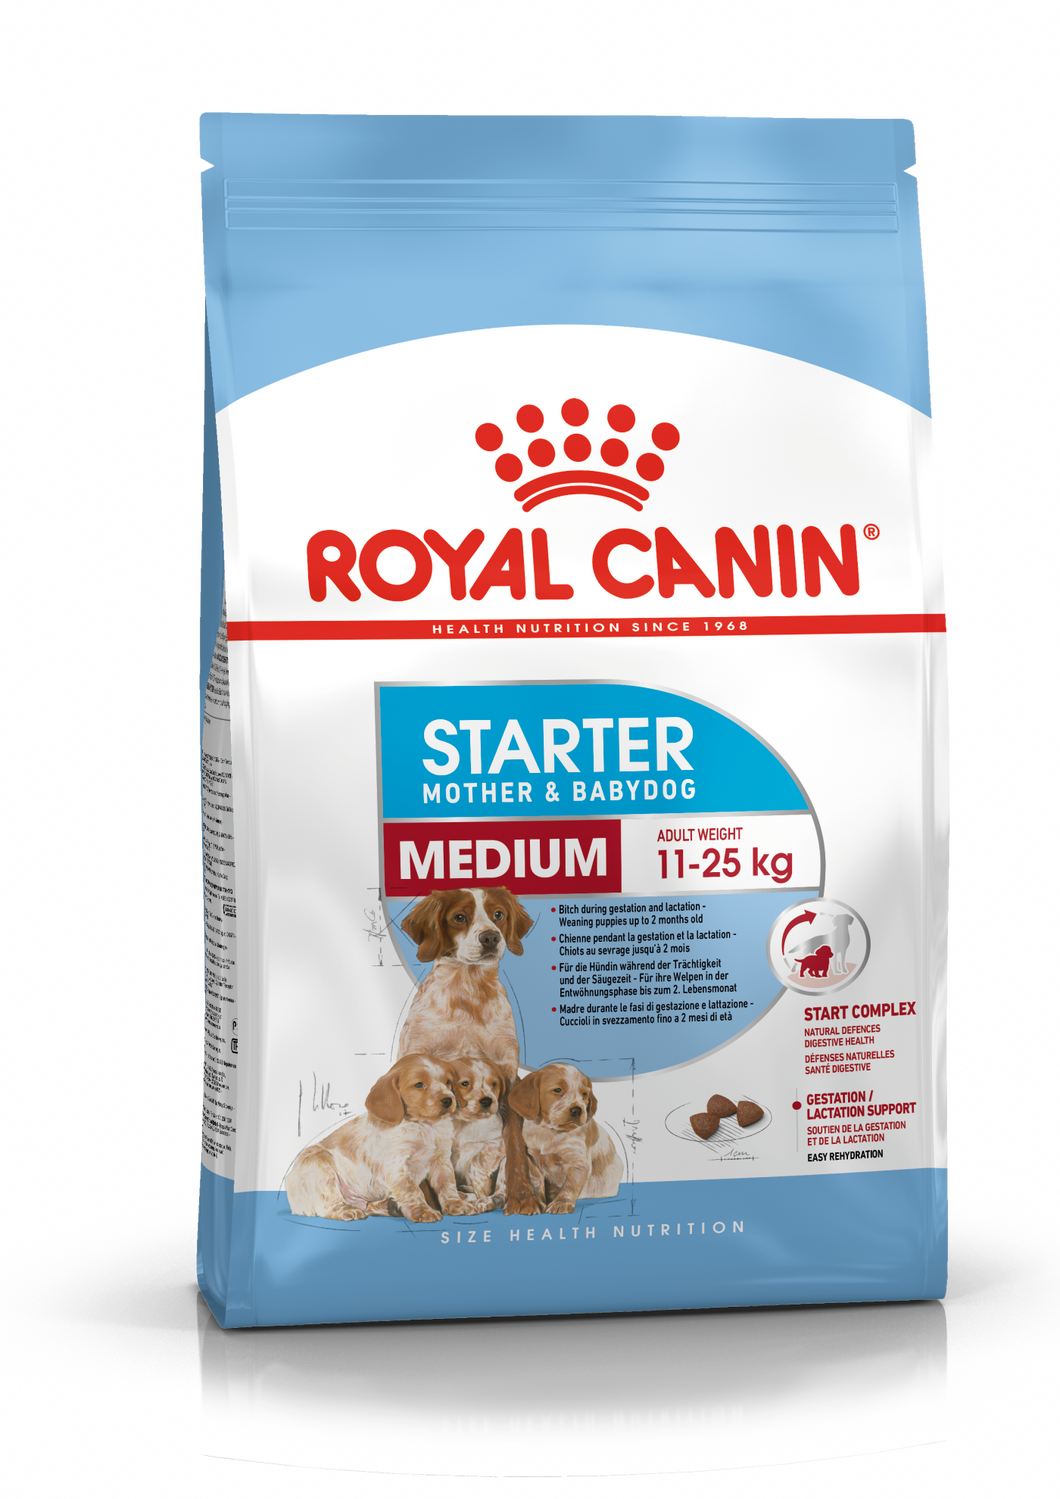 ROYAL CANIN Medium Starter Mother & Babydog Food